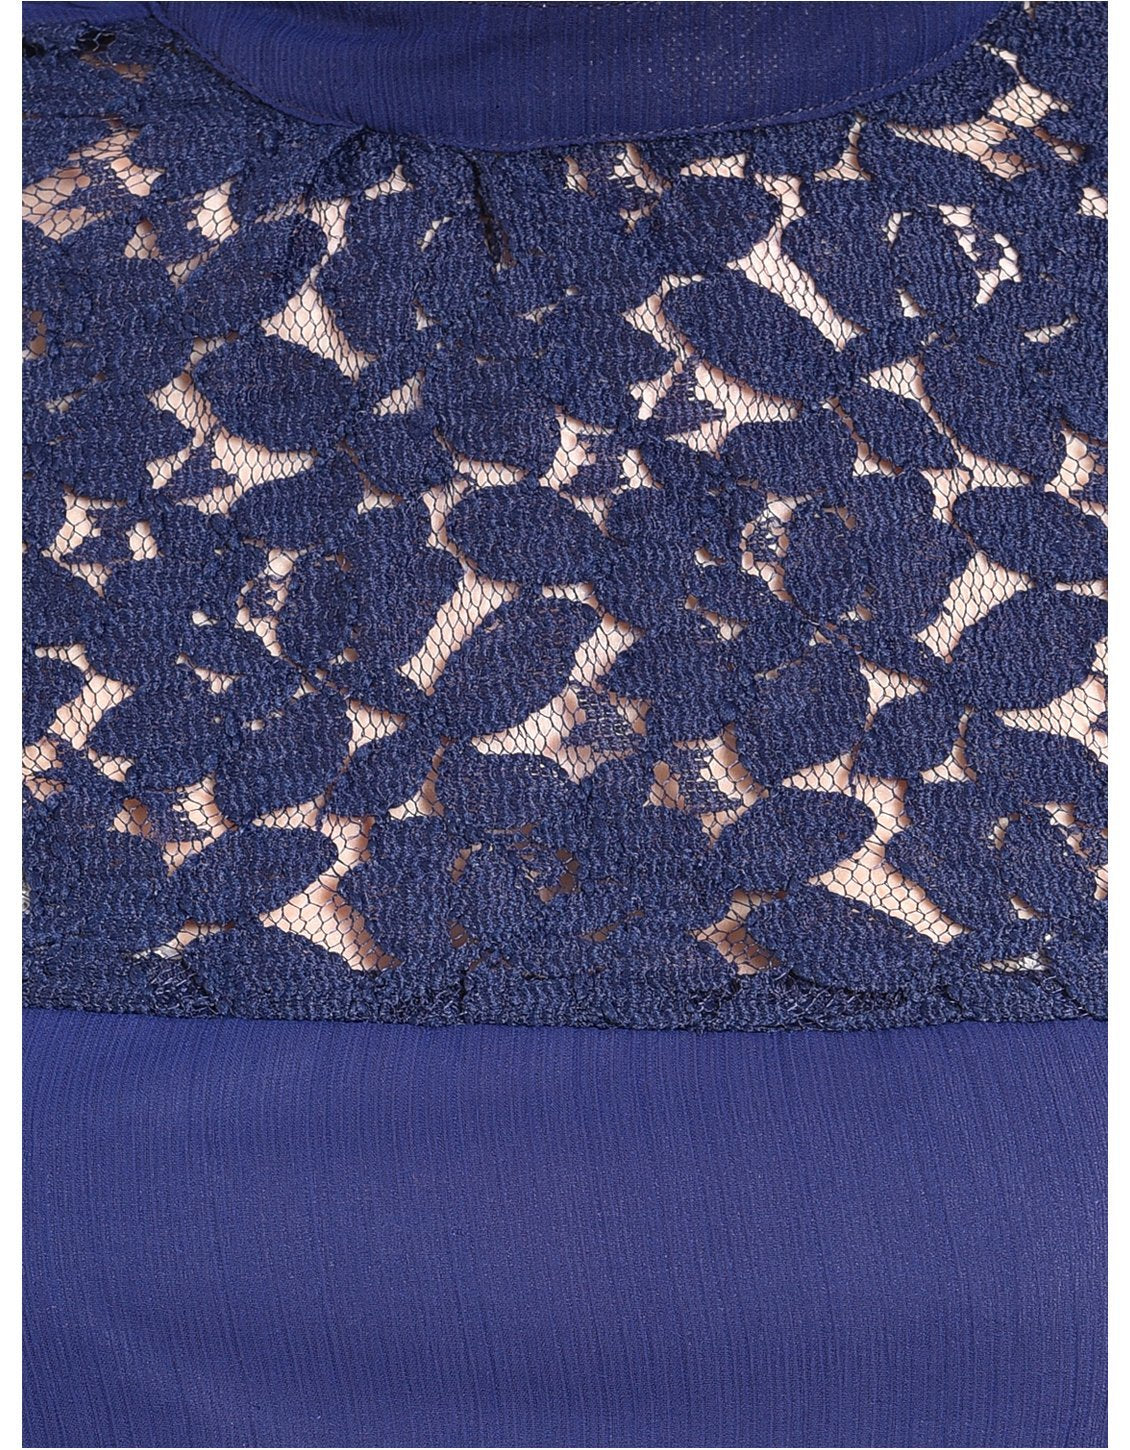 Women's Blue Printed 3/4 Sleeve Round Crepe Casual Top - Myshka